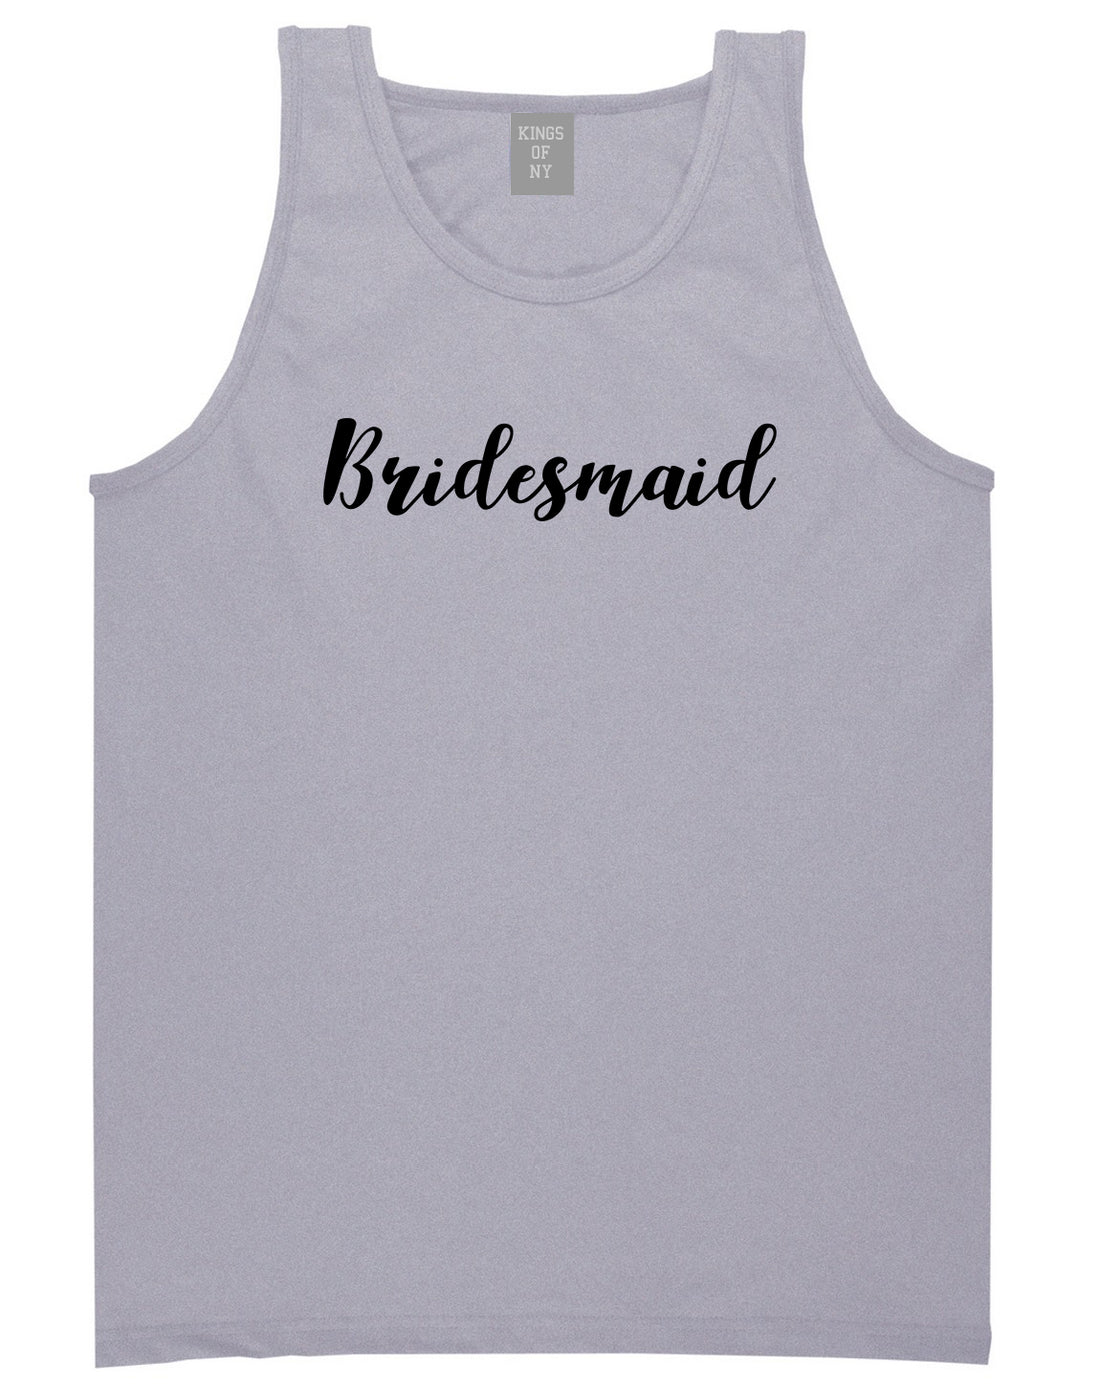 Bridesmaid Bachlorette Party Grey Tank Top Shirt by Kings Of NY